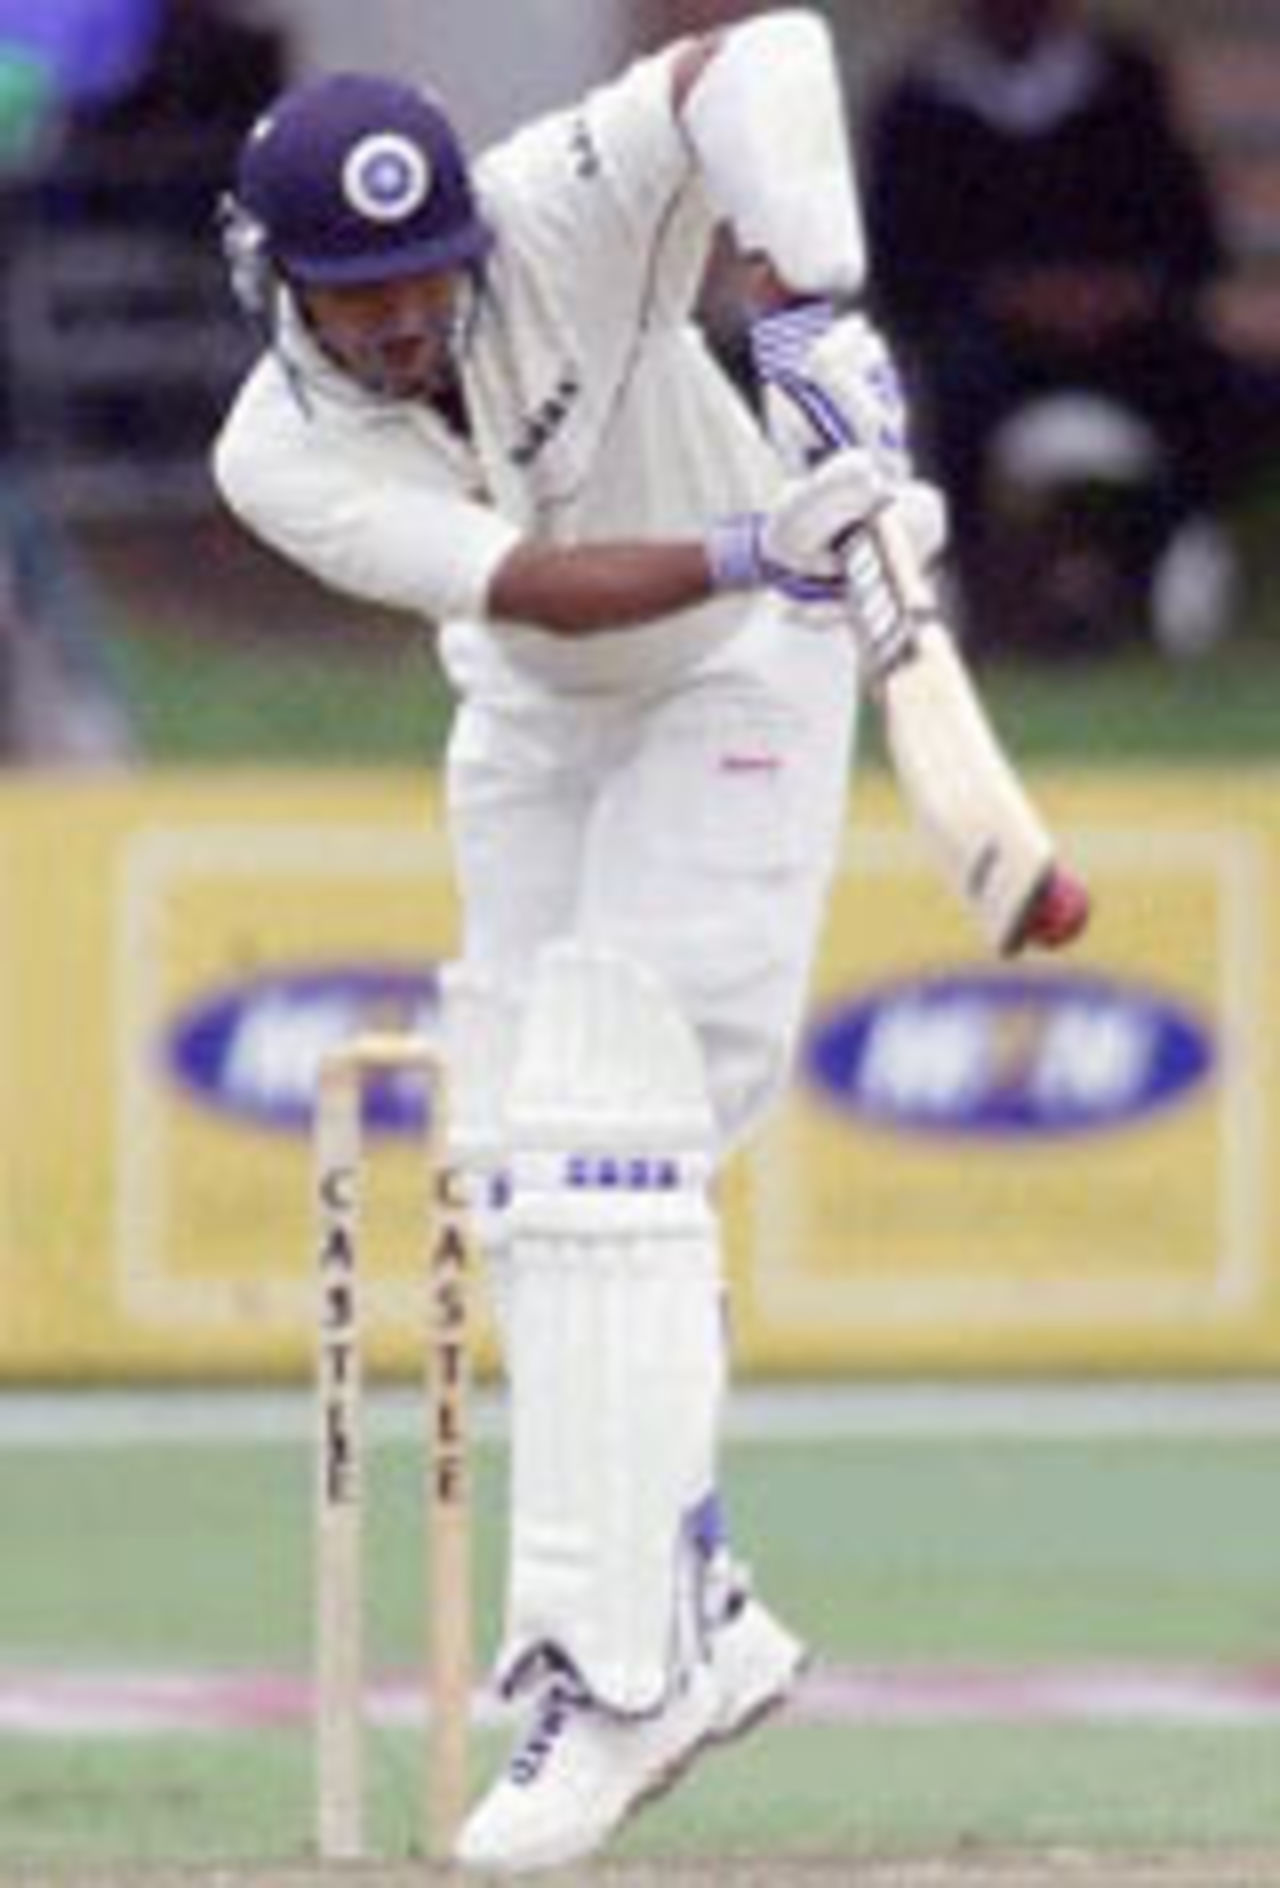 South Africa v India, 2nd Test match, Day Four, Crusaders Ground, St George's Park, Port Elizabeth, 16-20 November 2001